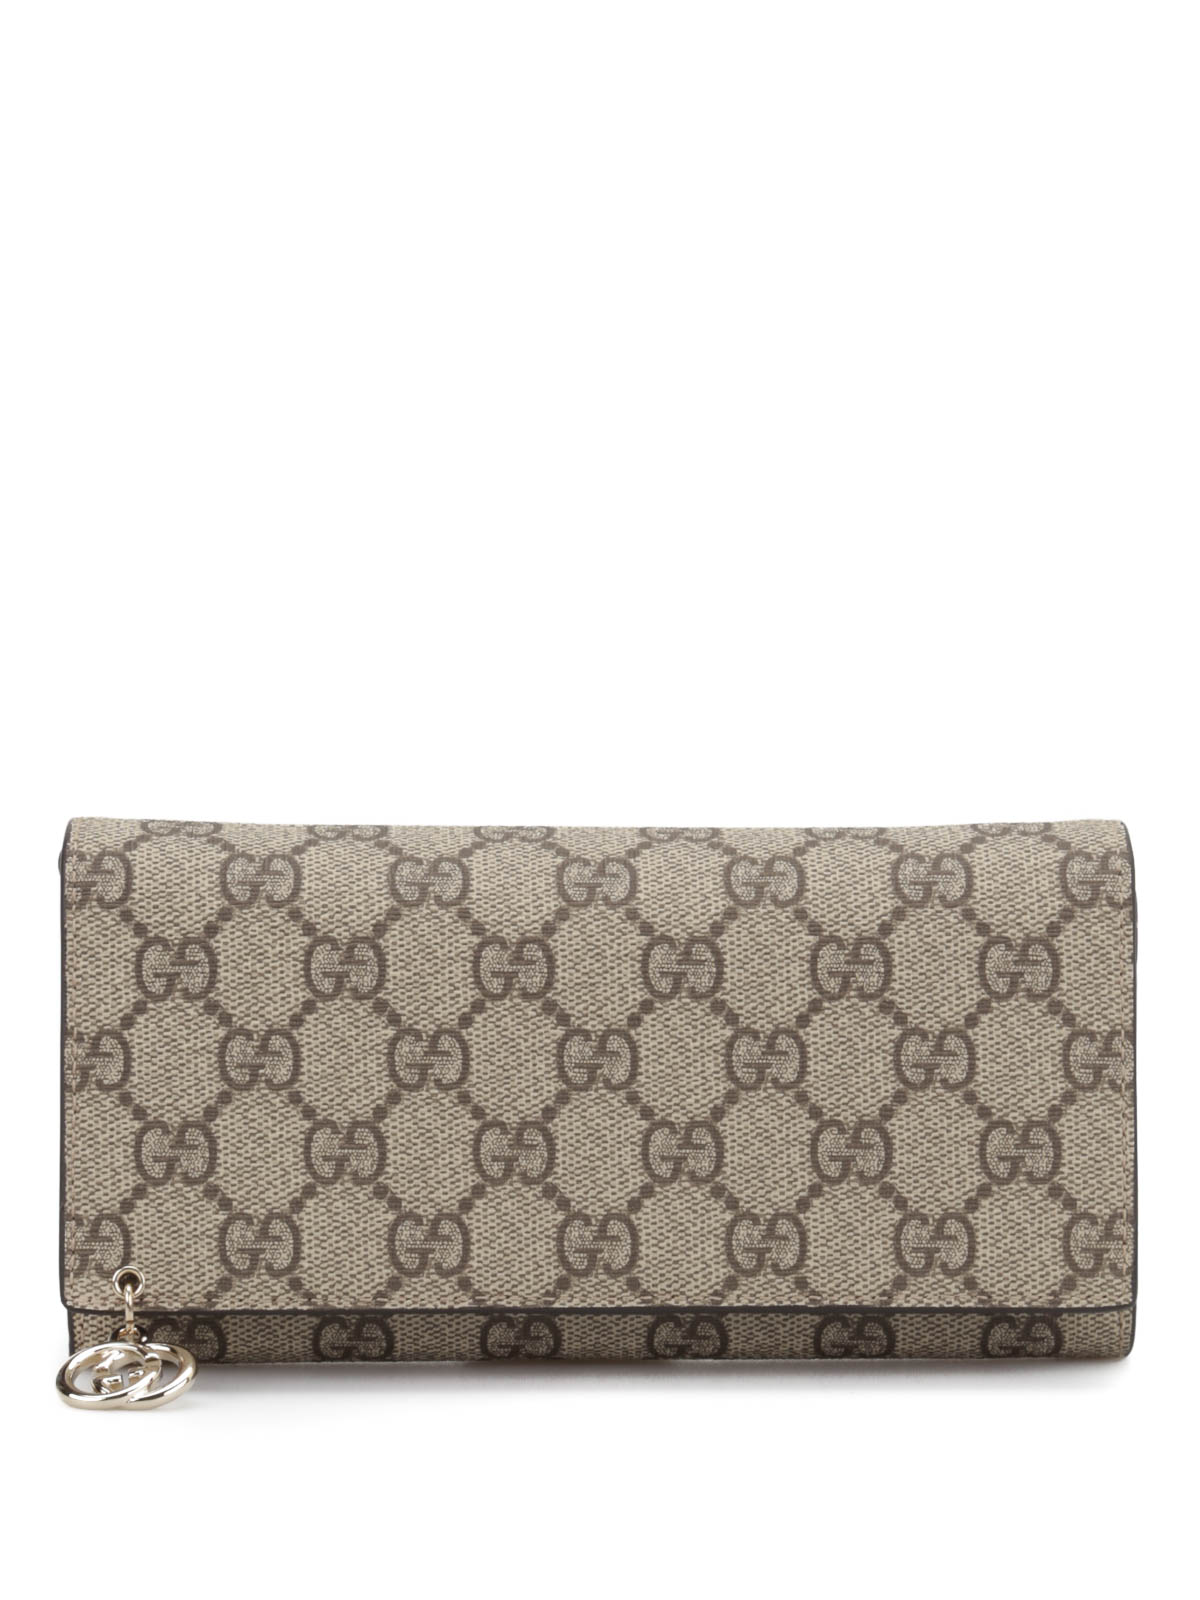 Gucci - Chain wallet - wallets & purses - 224262 KGDDG 9768